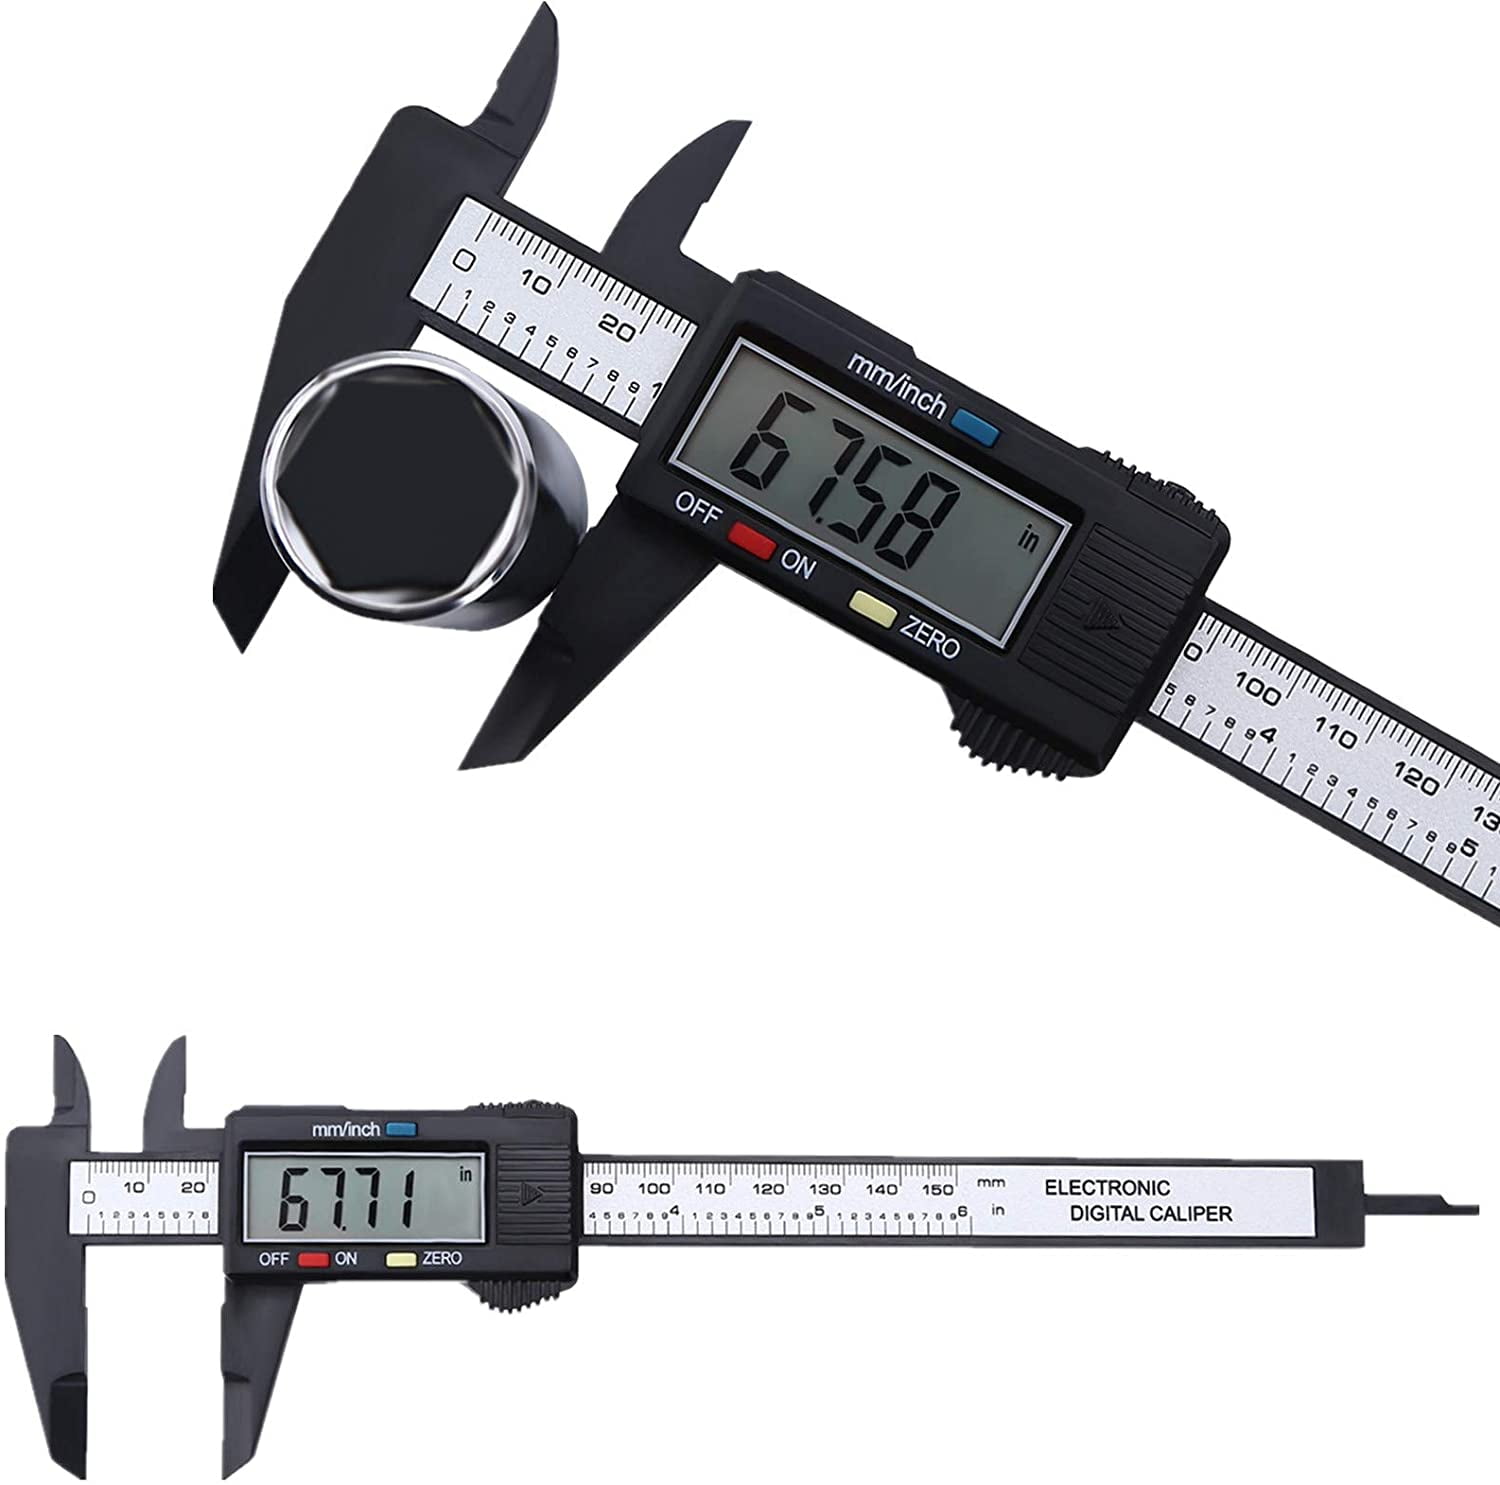 50cm/20" Firewood Measuring Tool For Length Guide 